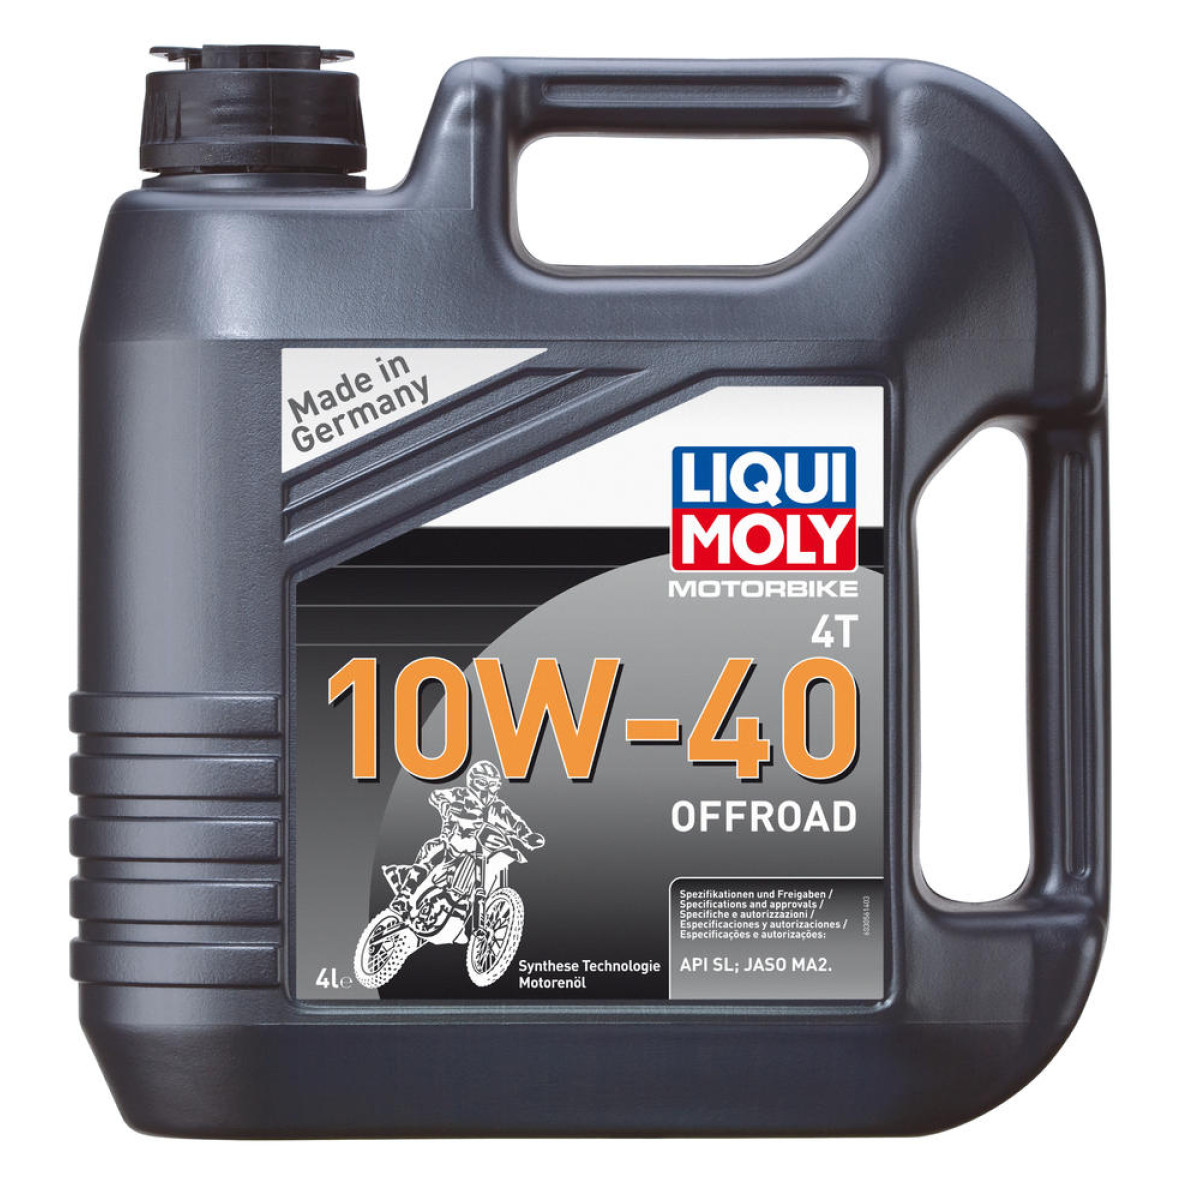 Liqui Moly Motor Oil Offroad 10W40, 4 Liter